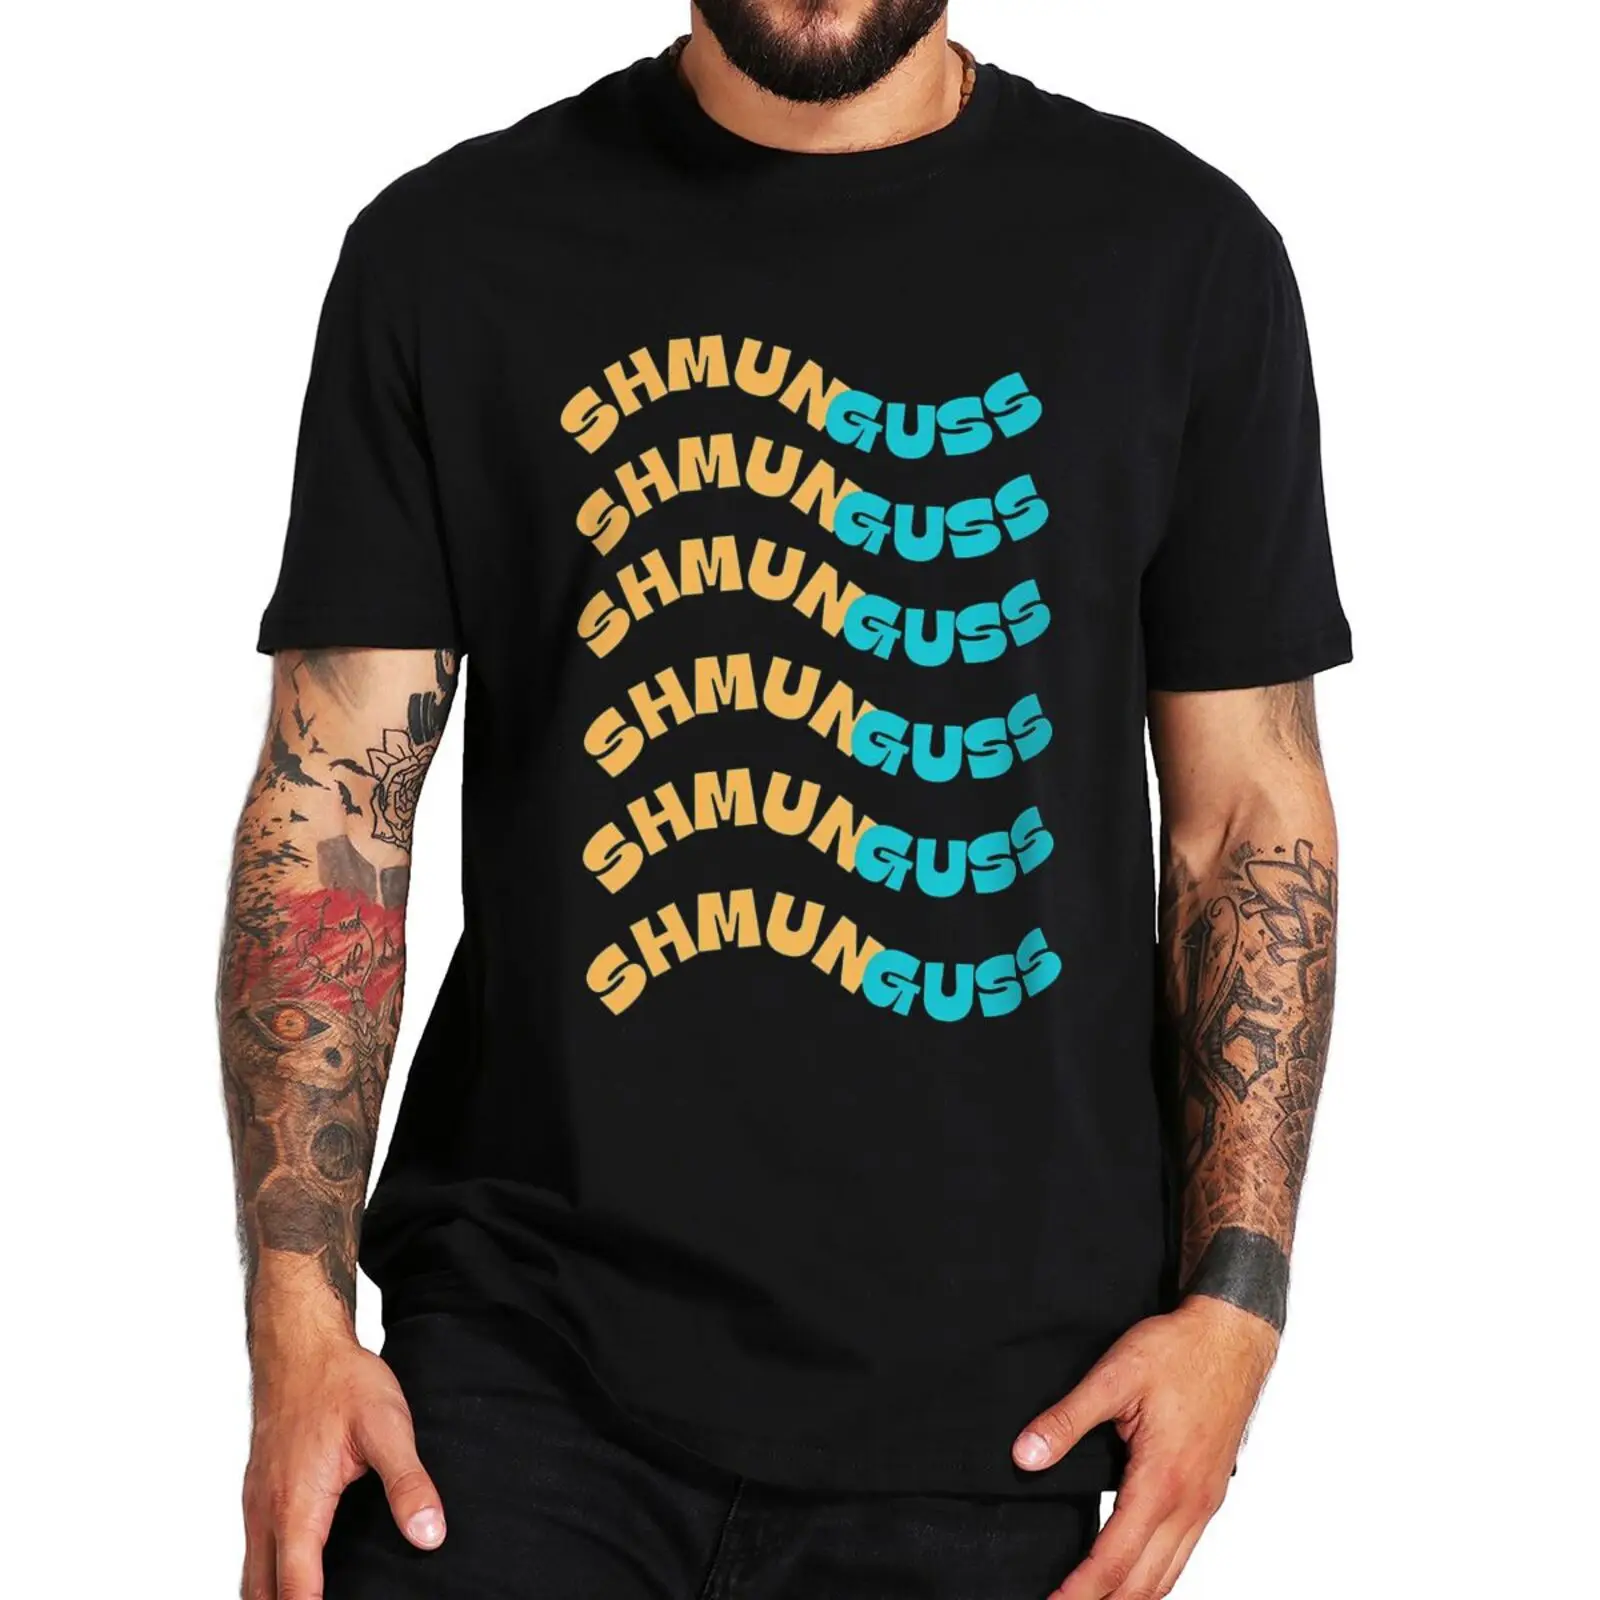 

Shmunguss T-shirt Retro Funny Memes Trending Hipster Men Women T Shirts EU Size 100% Cotton Unisex Soft Tops Tee